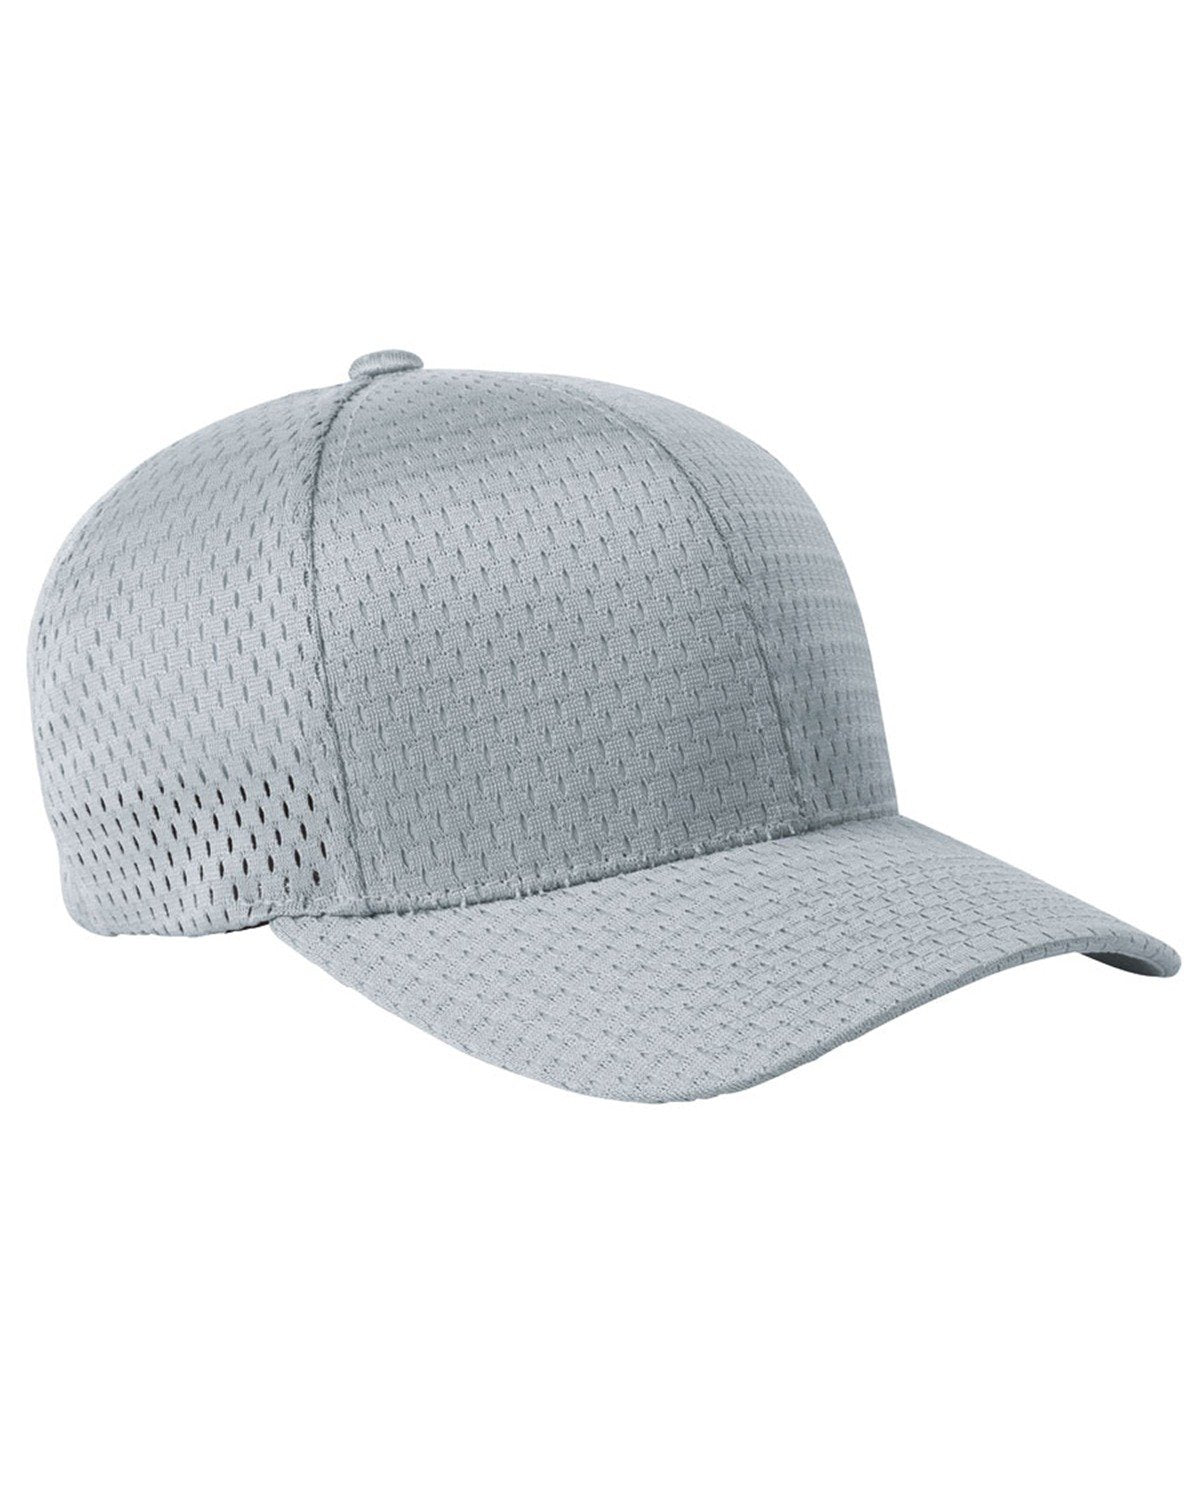 Flexfit adult athletic mesh cap